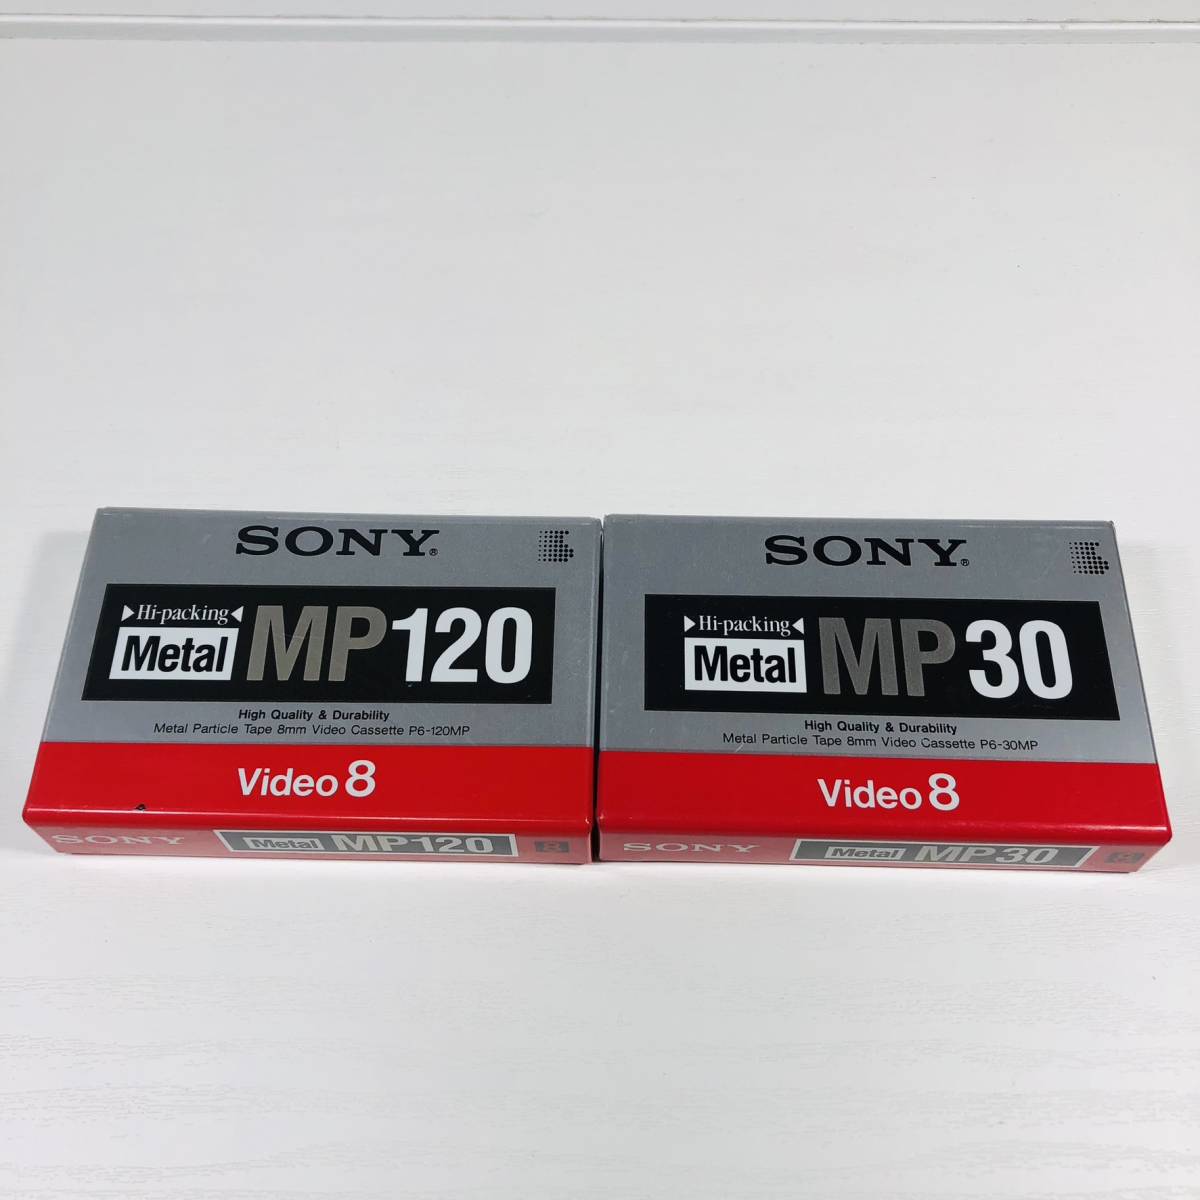  new goods SONY Metal MP120 P6-120MP MP30 P6-30MP 8mm video cassette 2 pcs set 